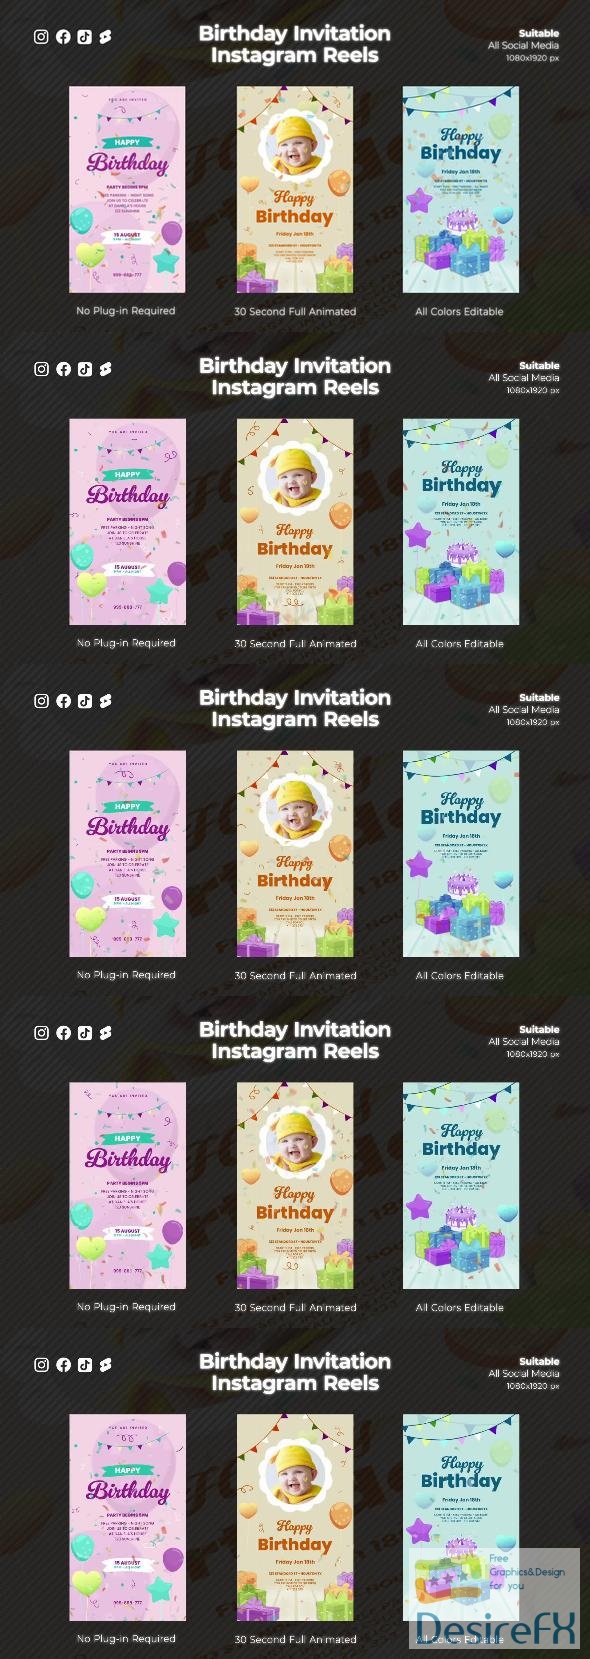 VideoHive Birthday Invitation Instagram Reels 47366336